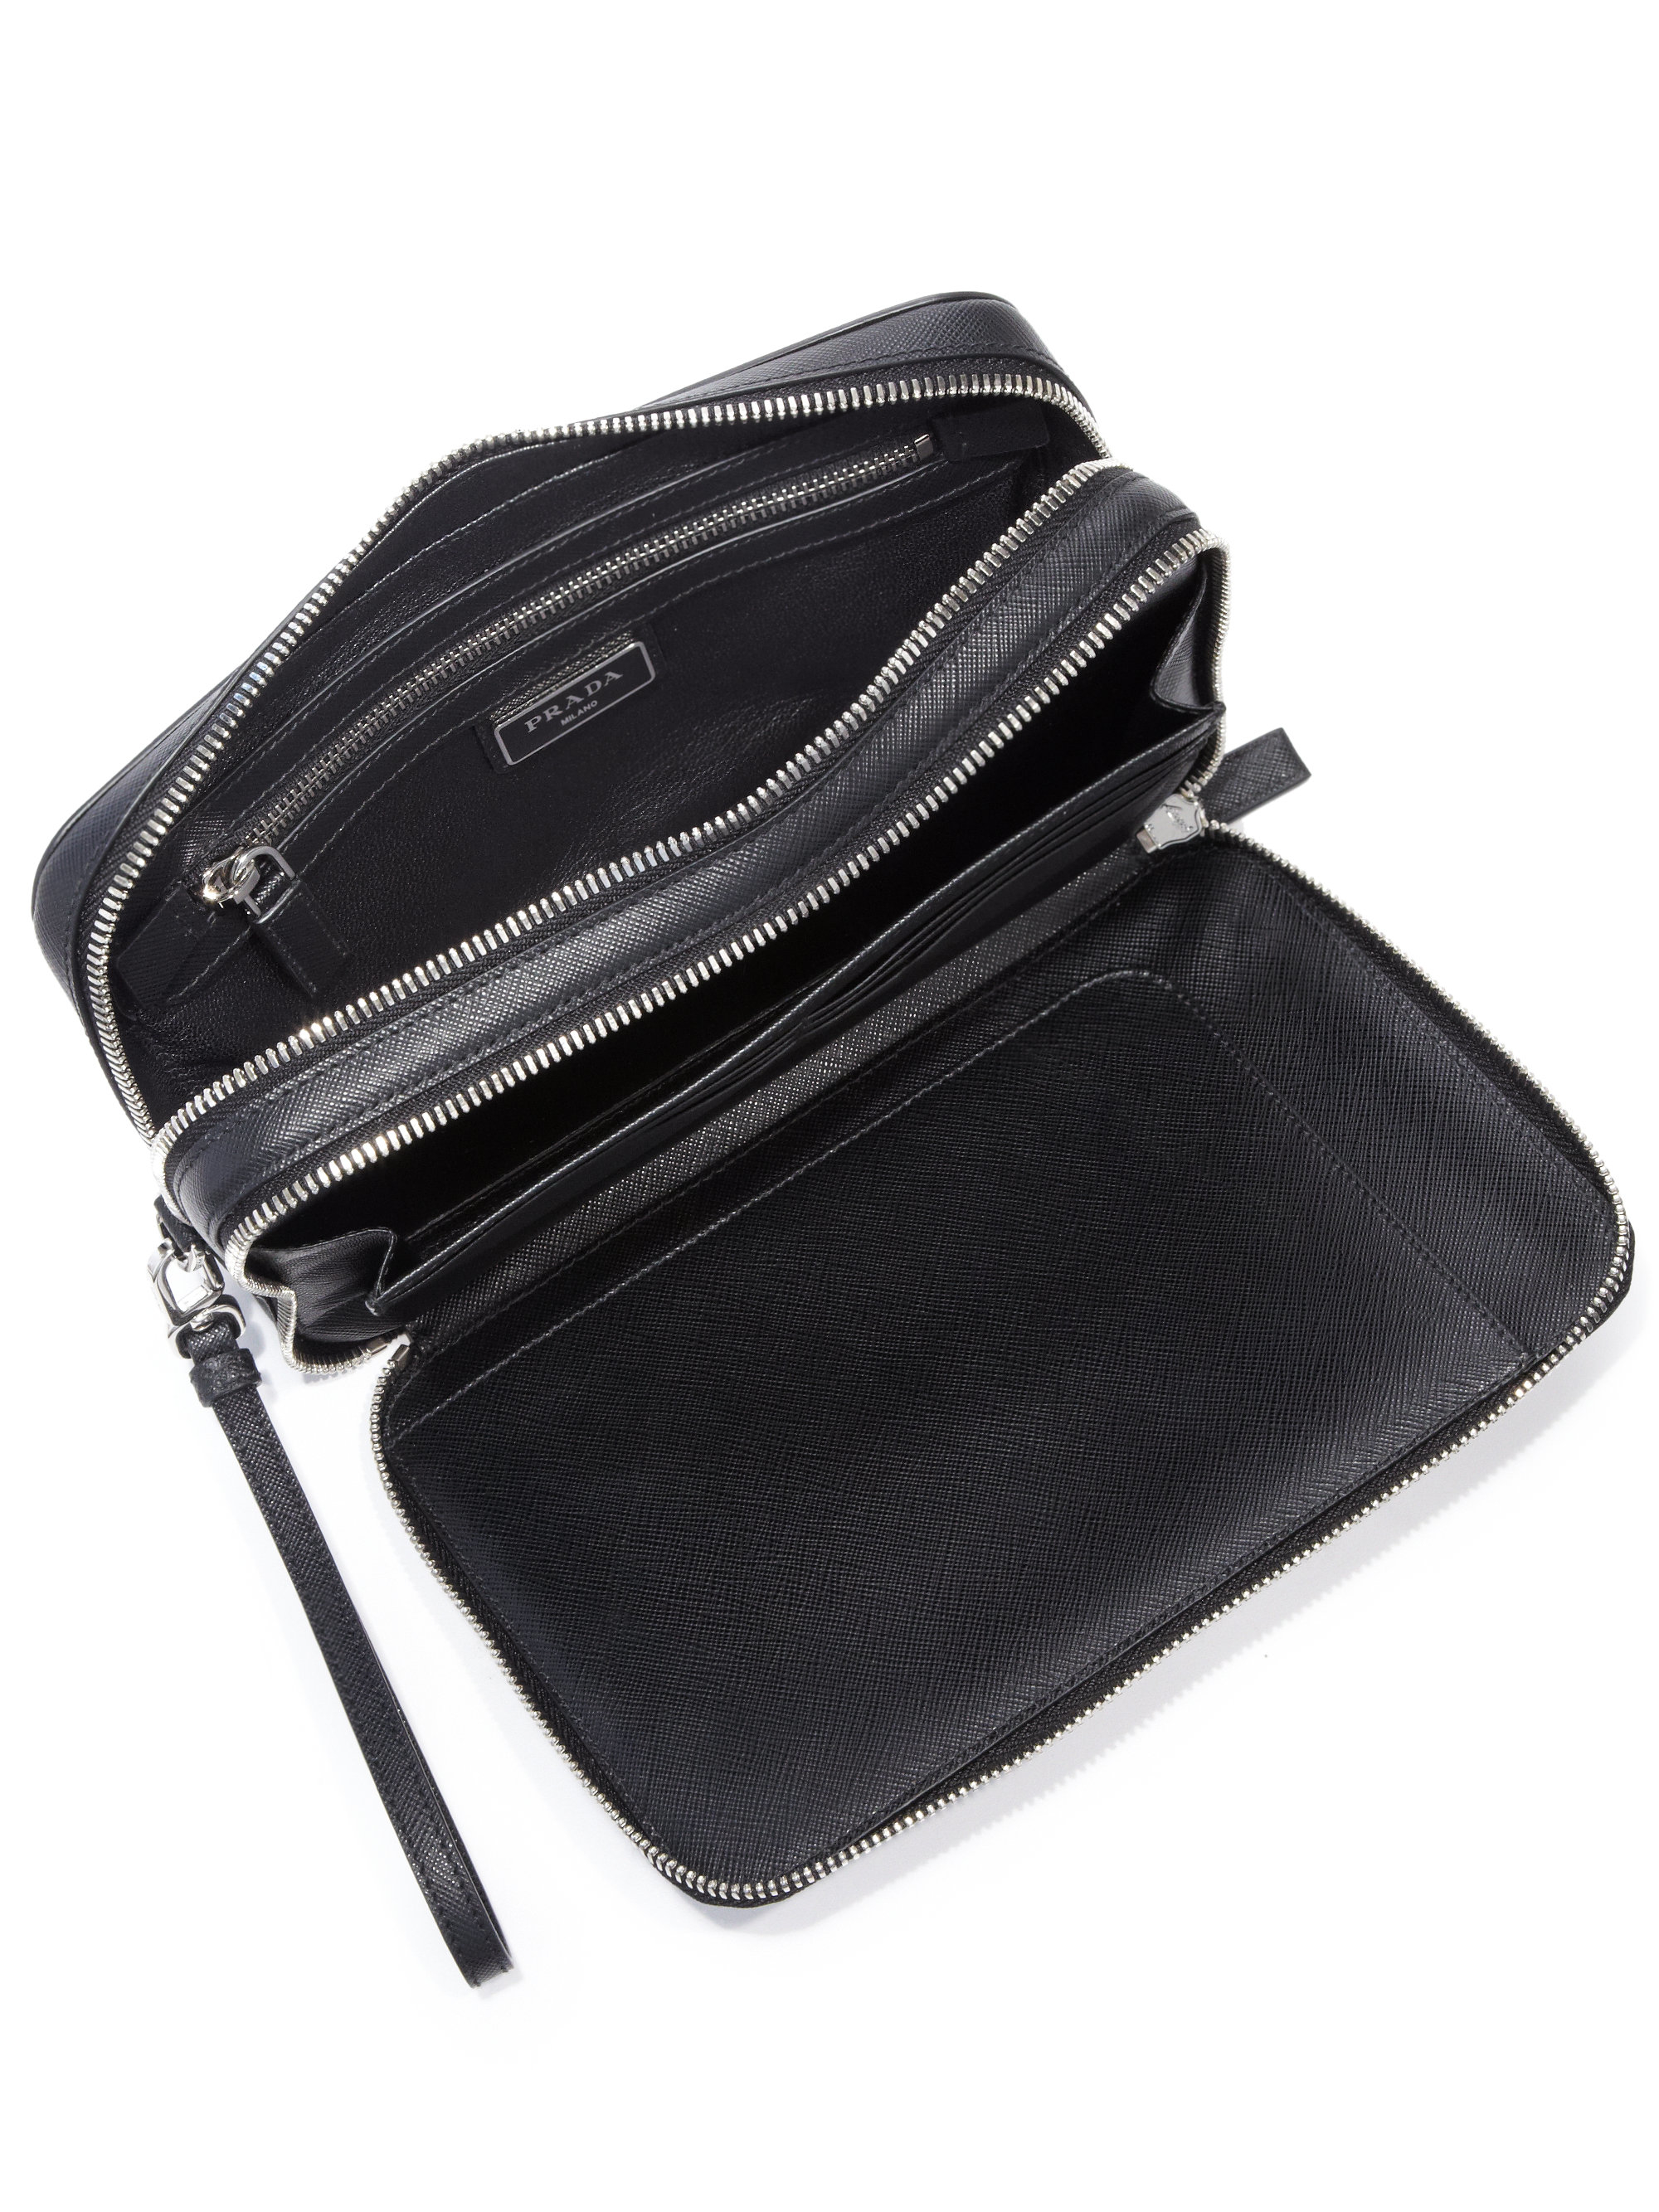 Prada Saffiano Leather Travel Wallet in Black for Men | Lyst  